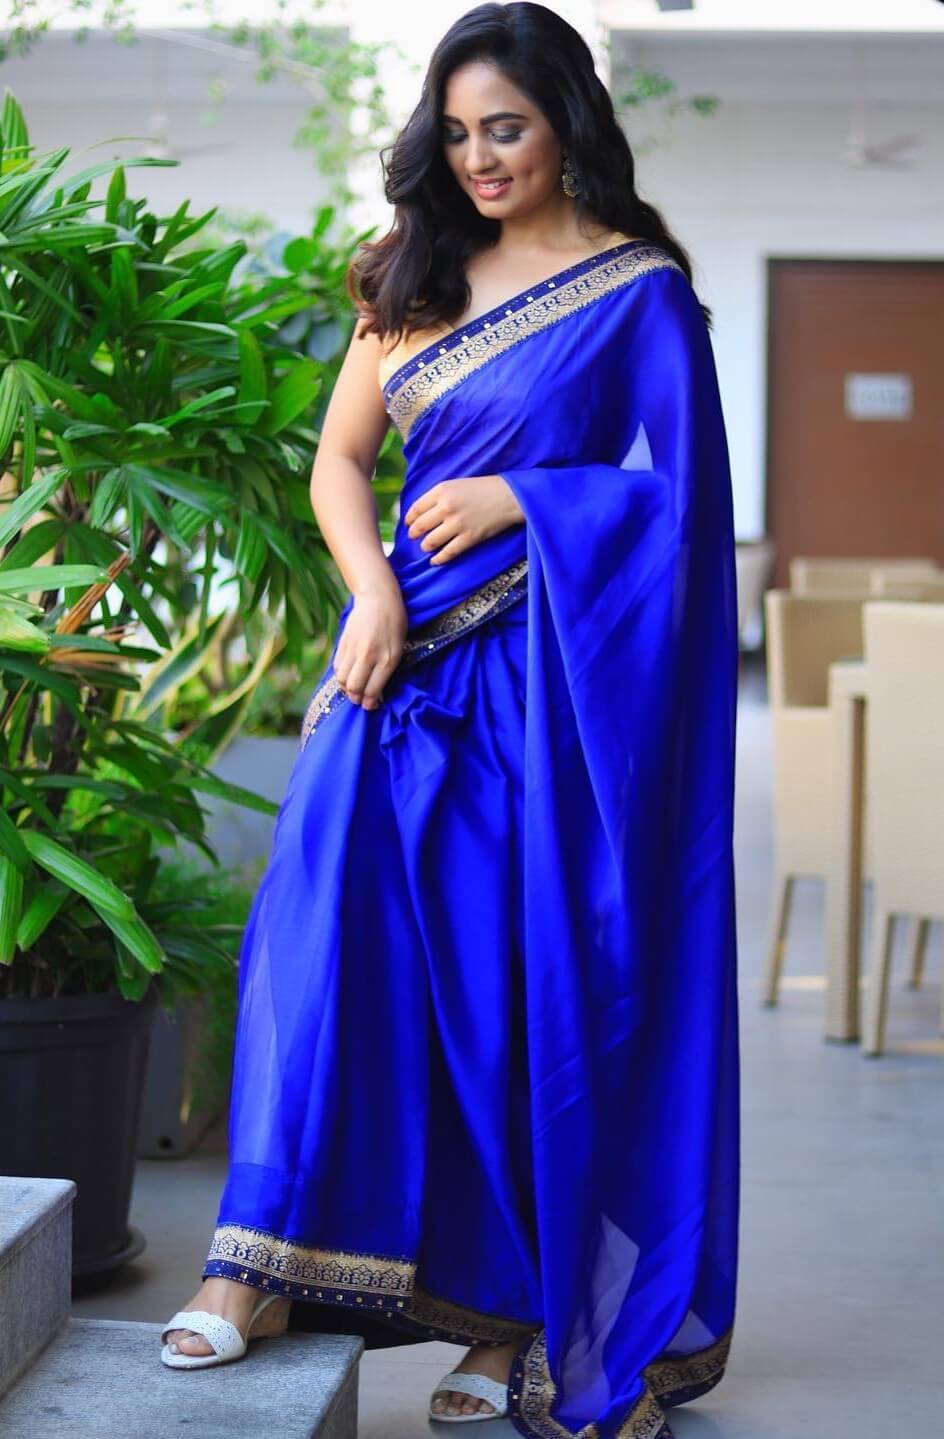 Srushti Dange Fabulous Outfits And Looks - K4 Fashion